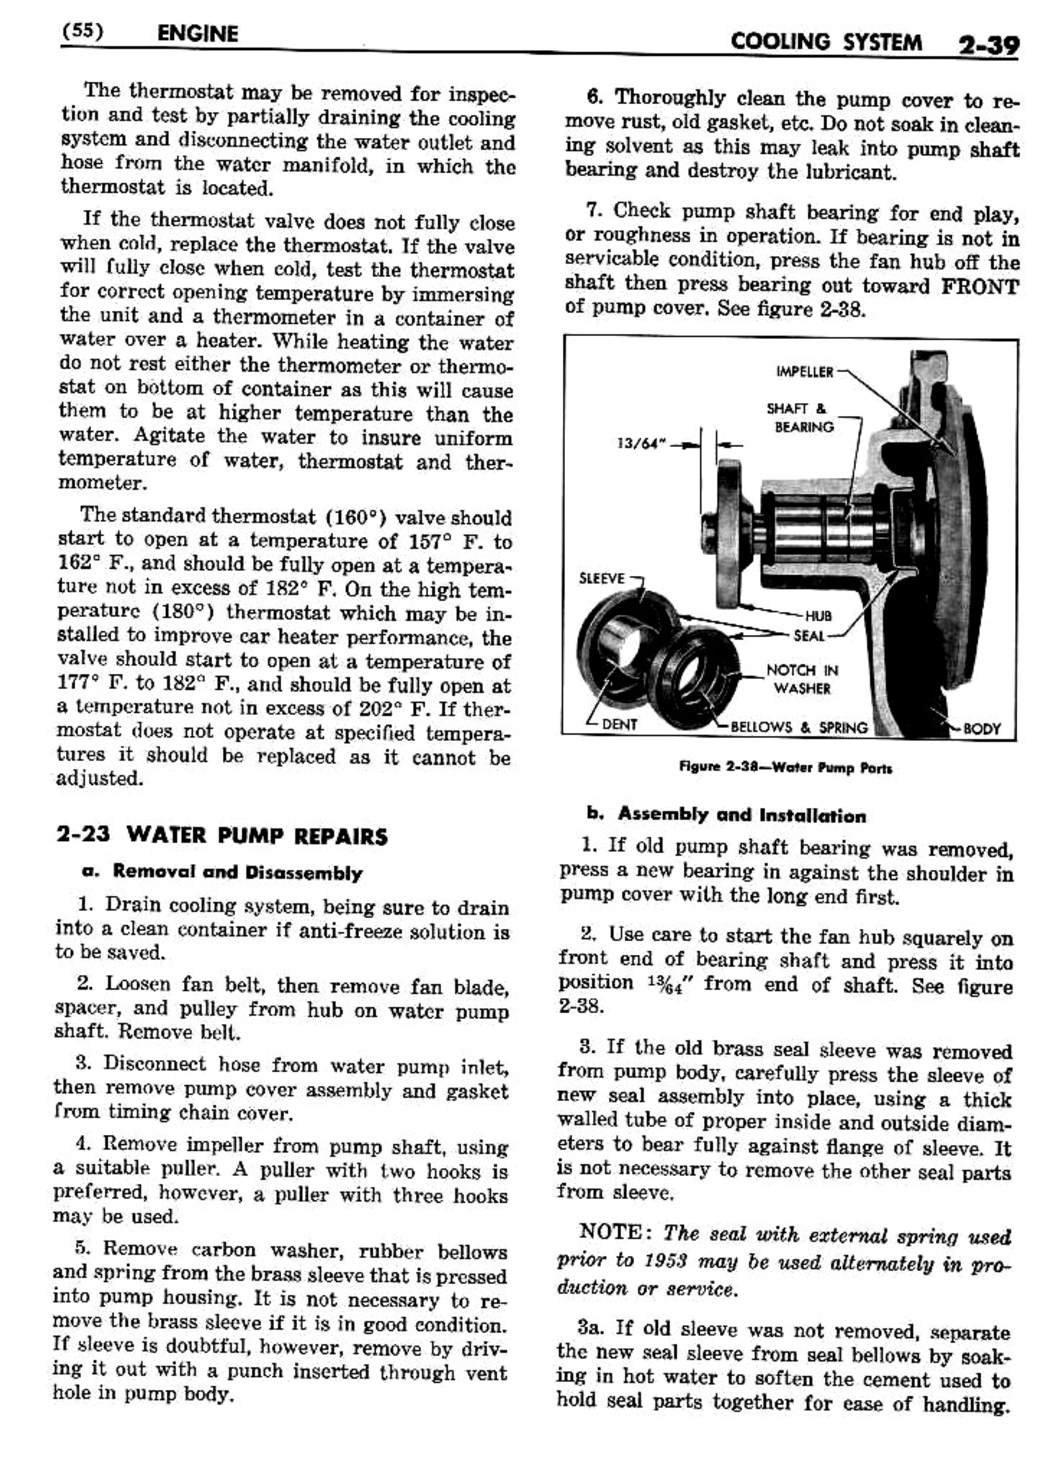 n_03 1956 Buick Shop Manual - Engine-039-039.jpg